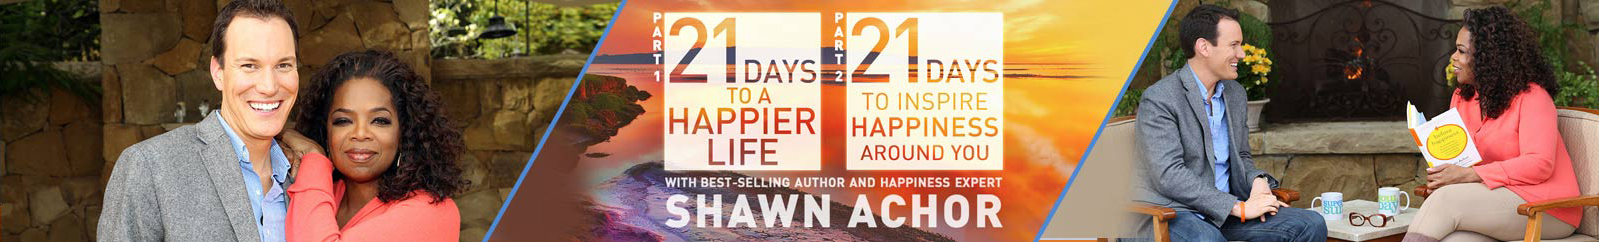 Shawn Achor on Oprah Winfrey - 21 Days to a Happier Life